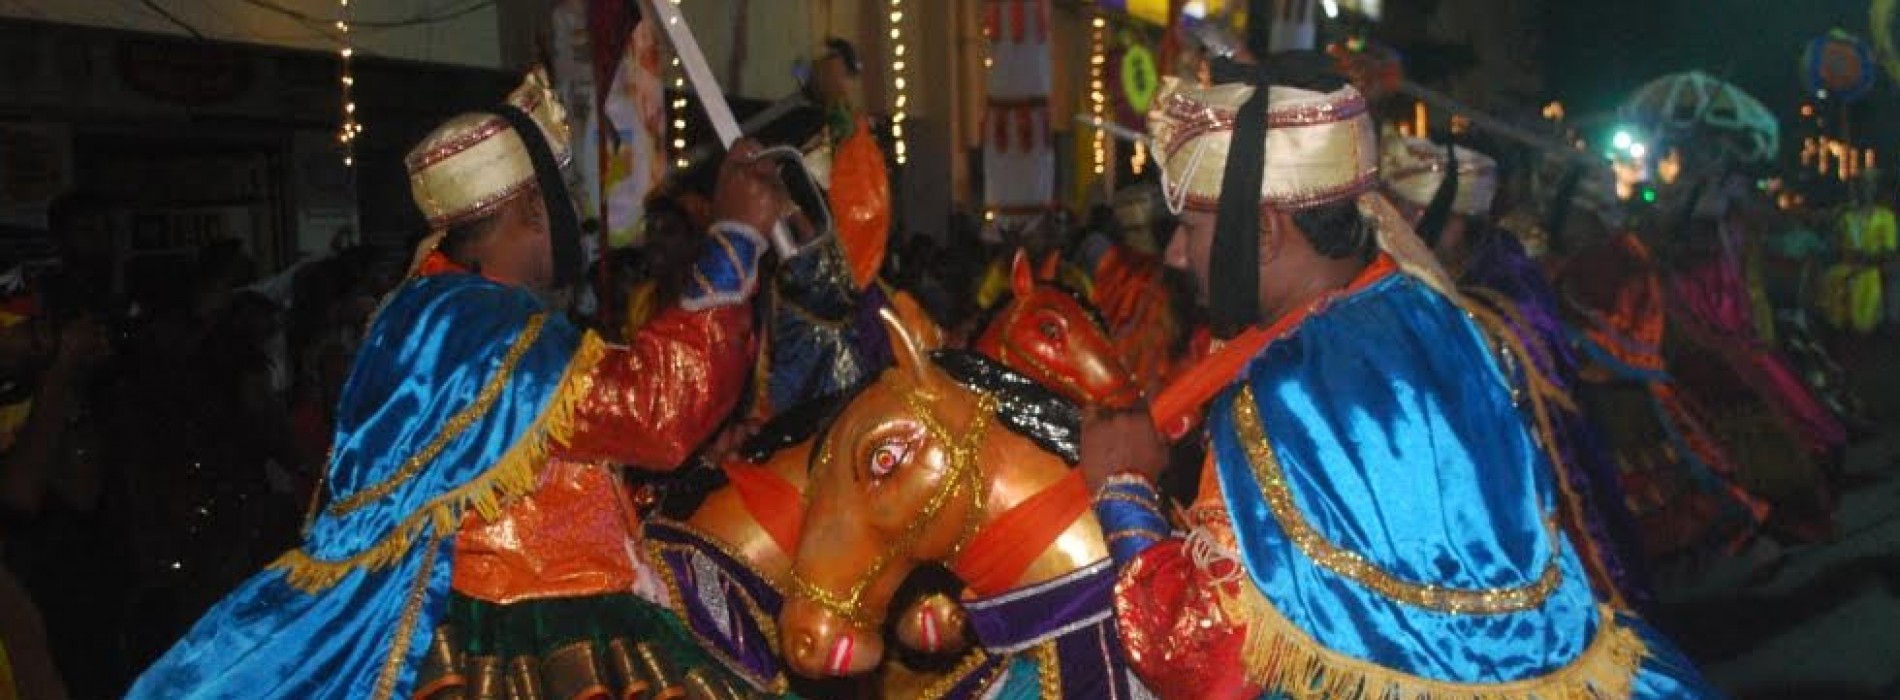 Shigmo festivities to begin in Goa from March 14 – 27, 2017